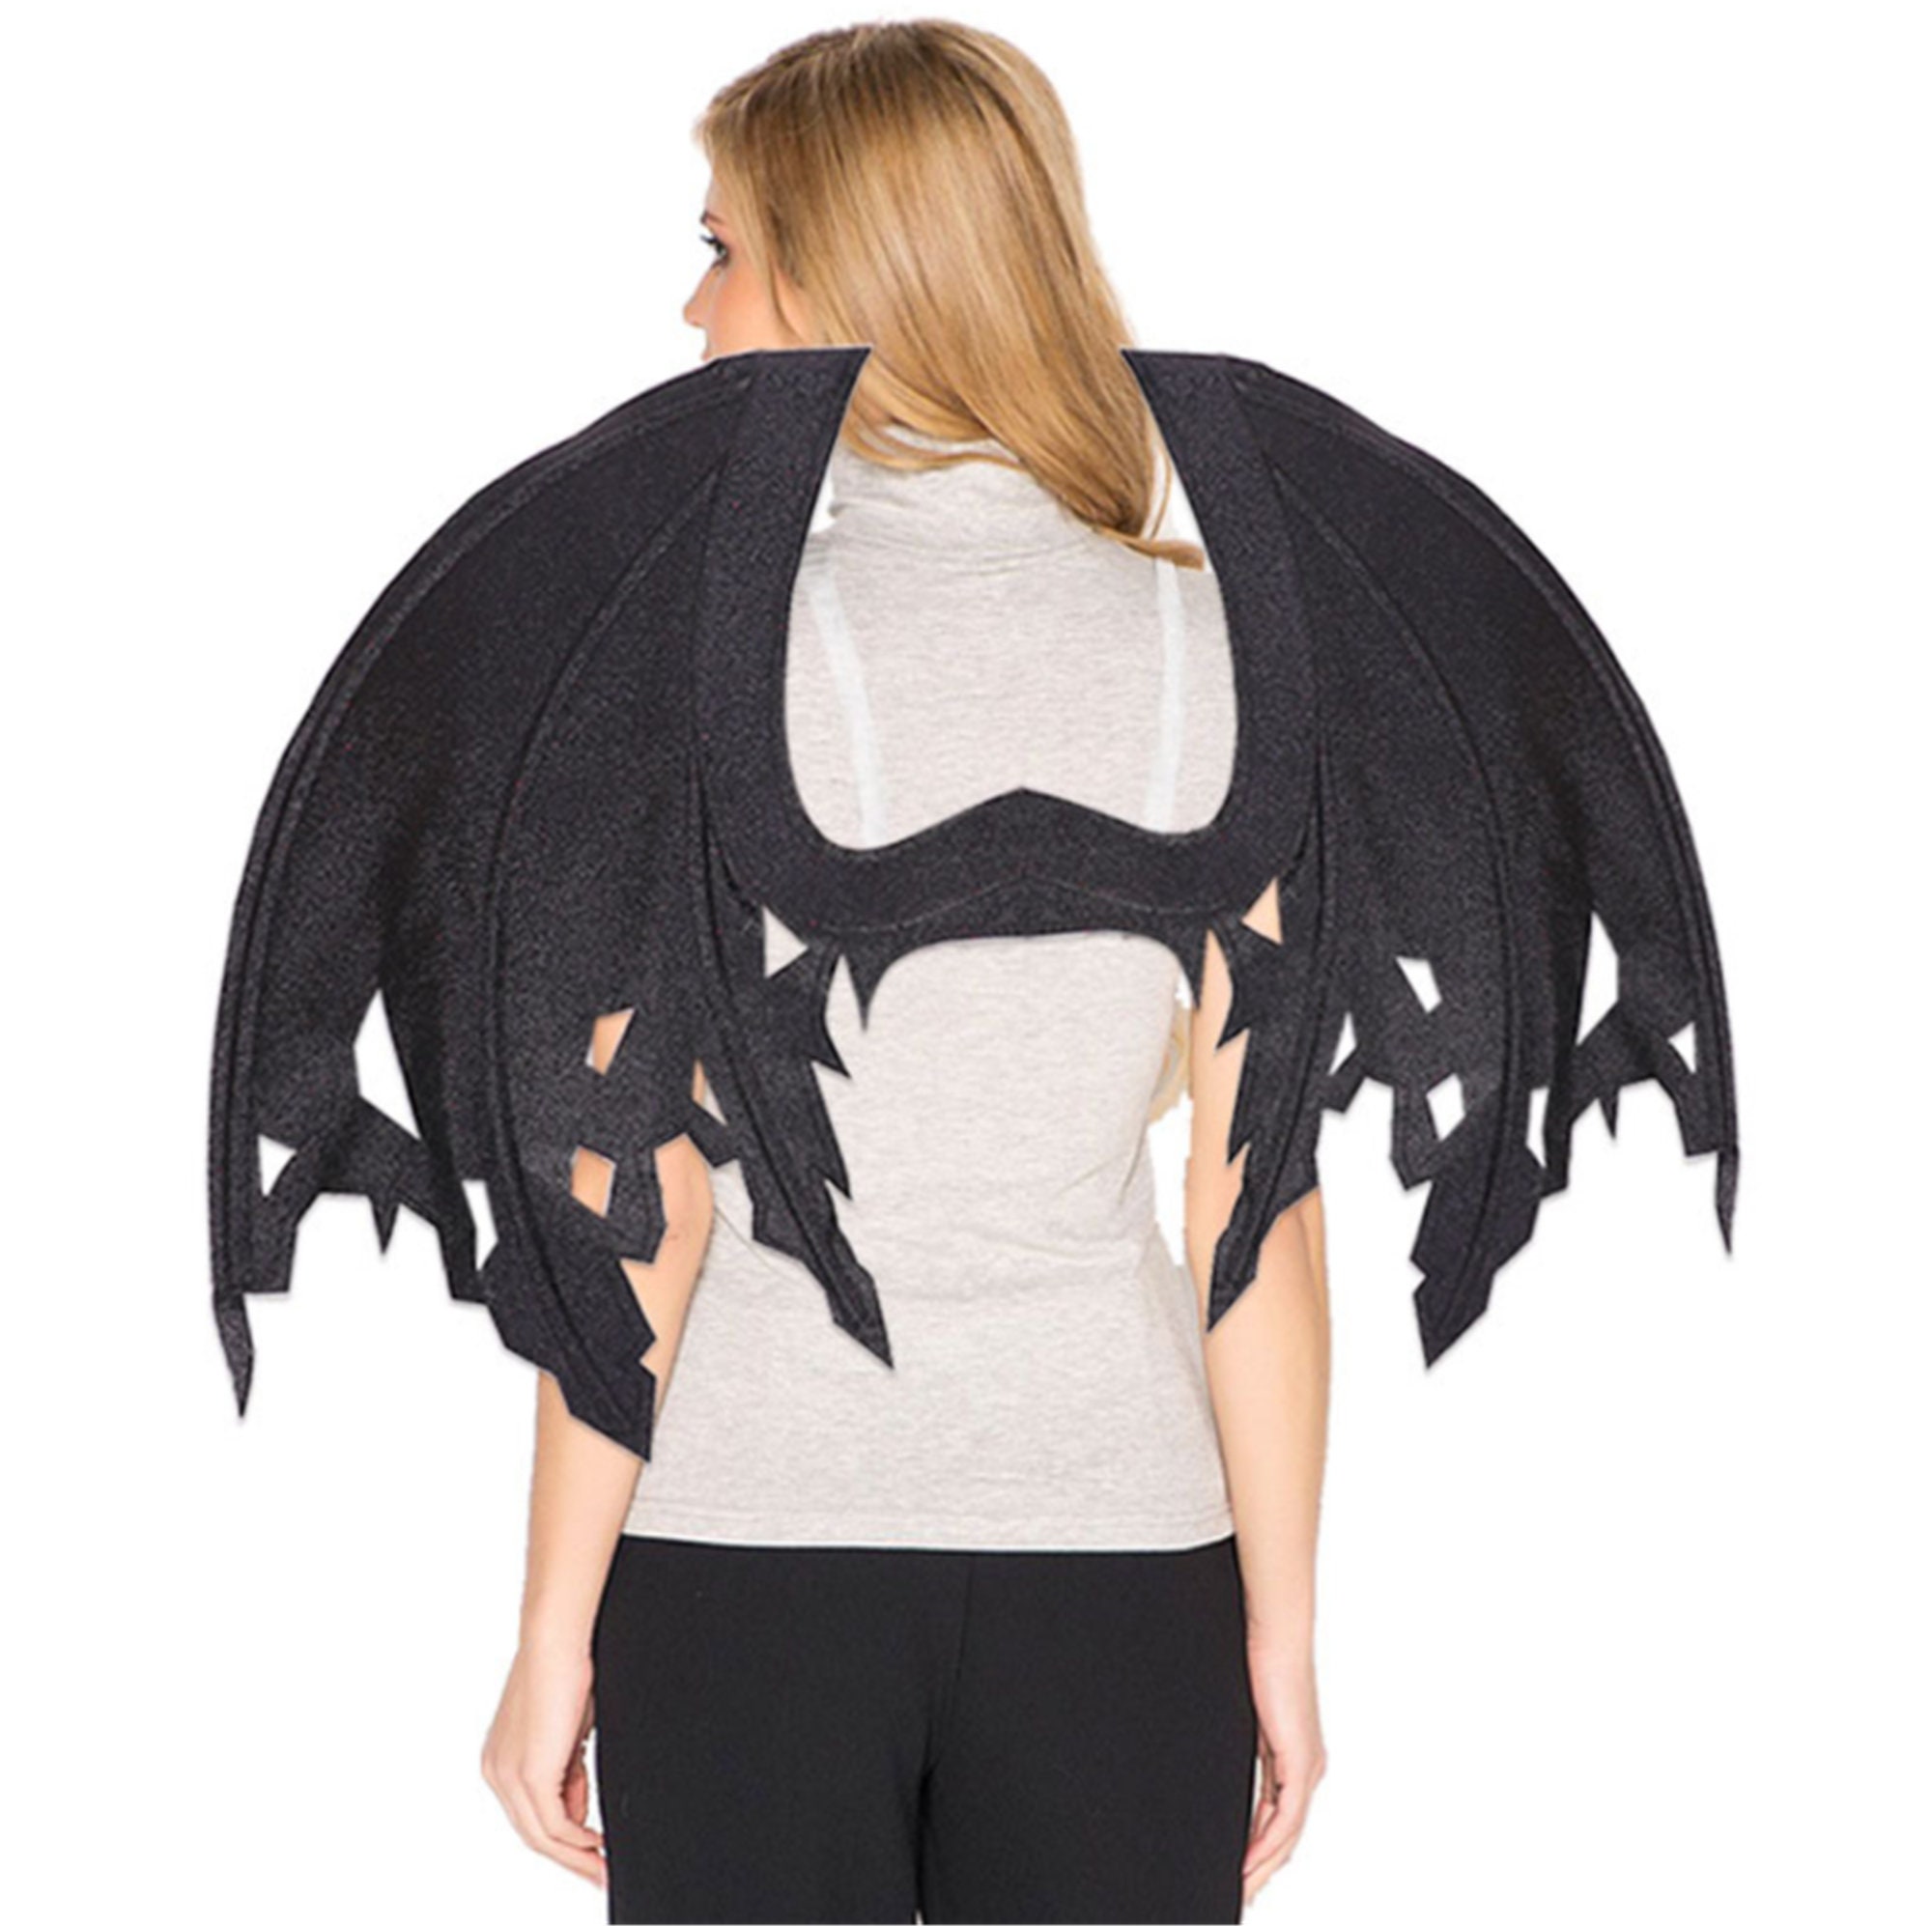  Evonecy Cosplay Halloween Devil Wings, Lightweight 87cm with  Elastic Belt, White/Black Novelty Halloween Bat Wings, for Kids  Teenagers(White Black Bone Wings HGDS19001A) : צעצועים ומשחקי